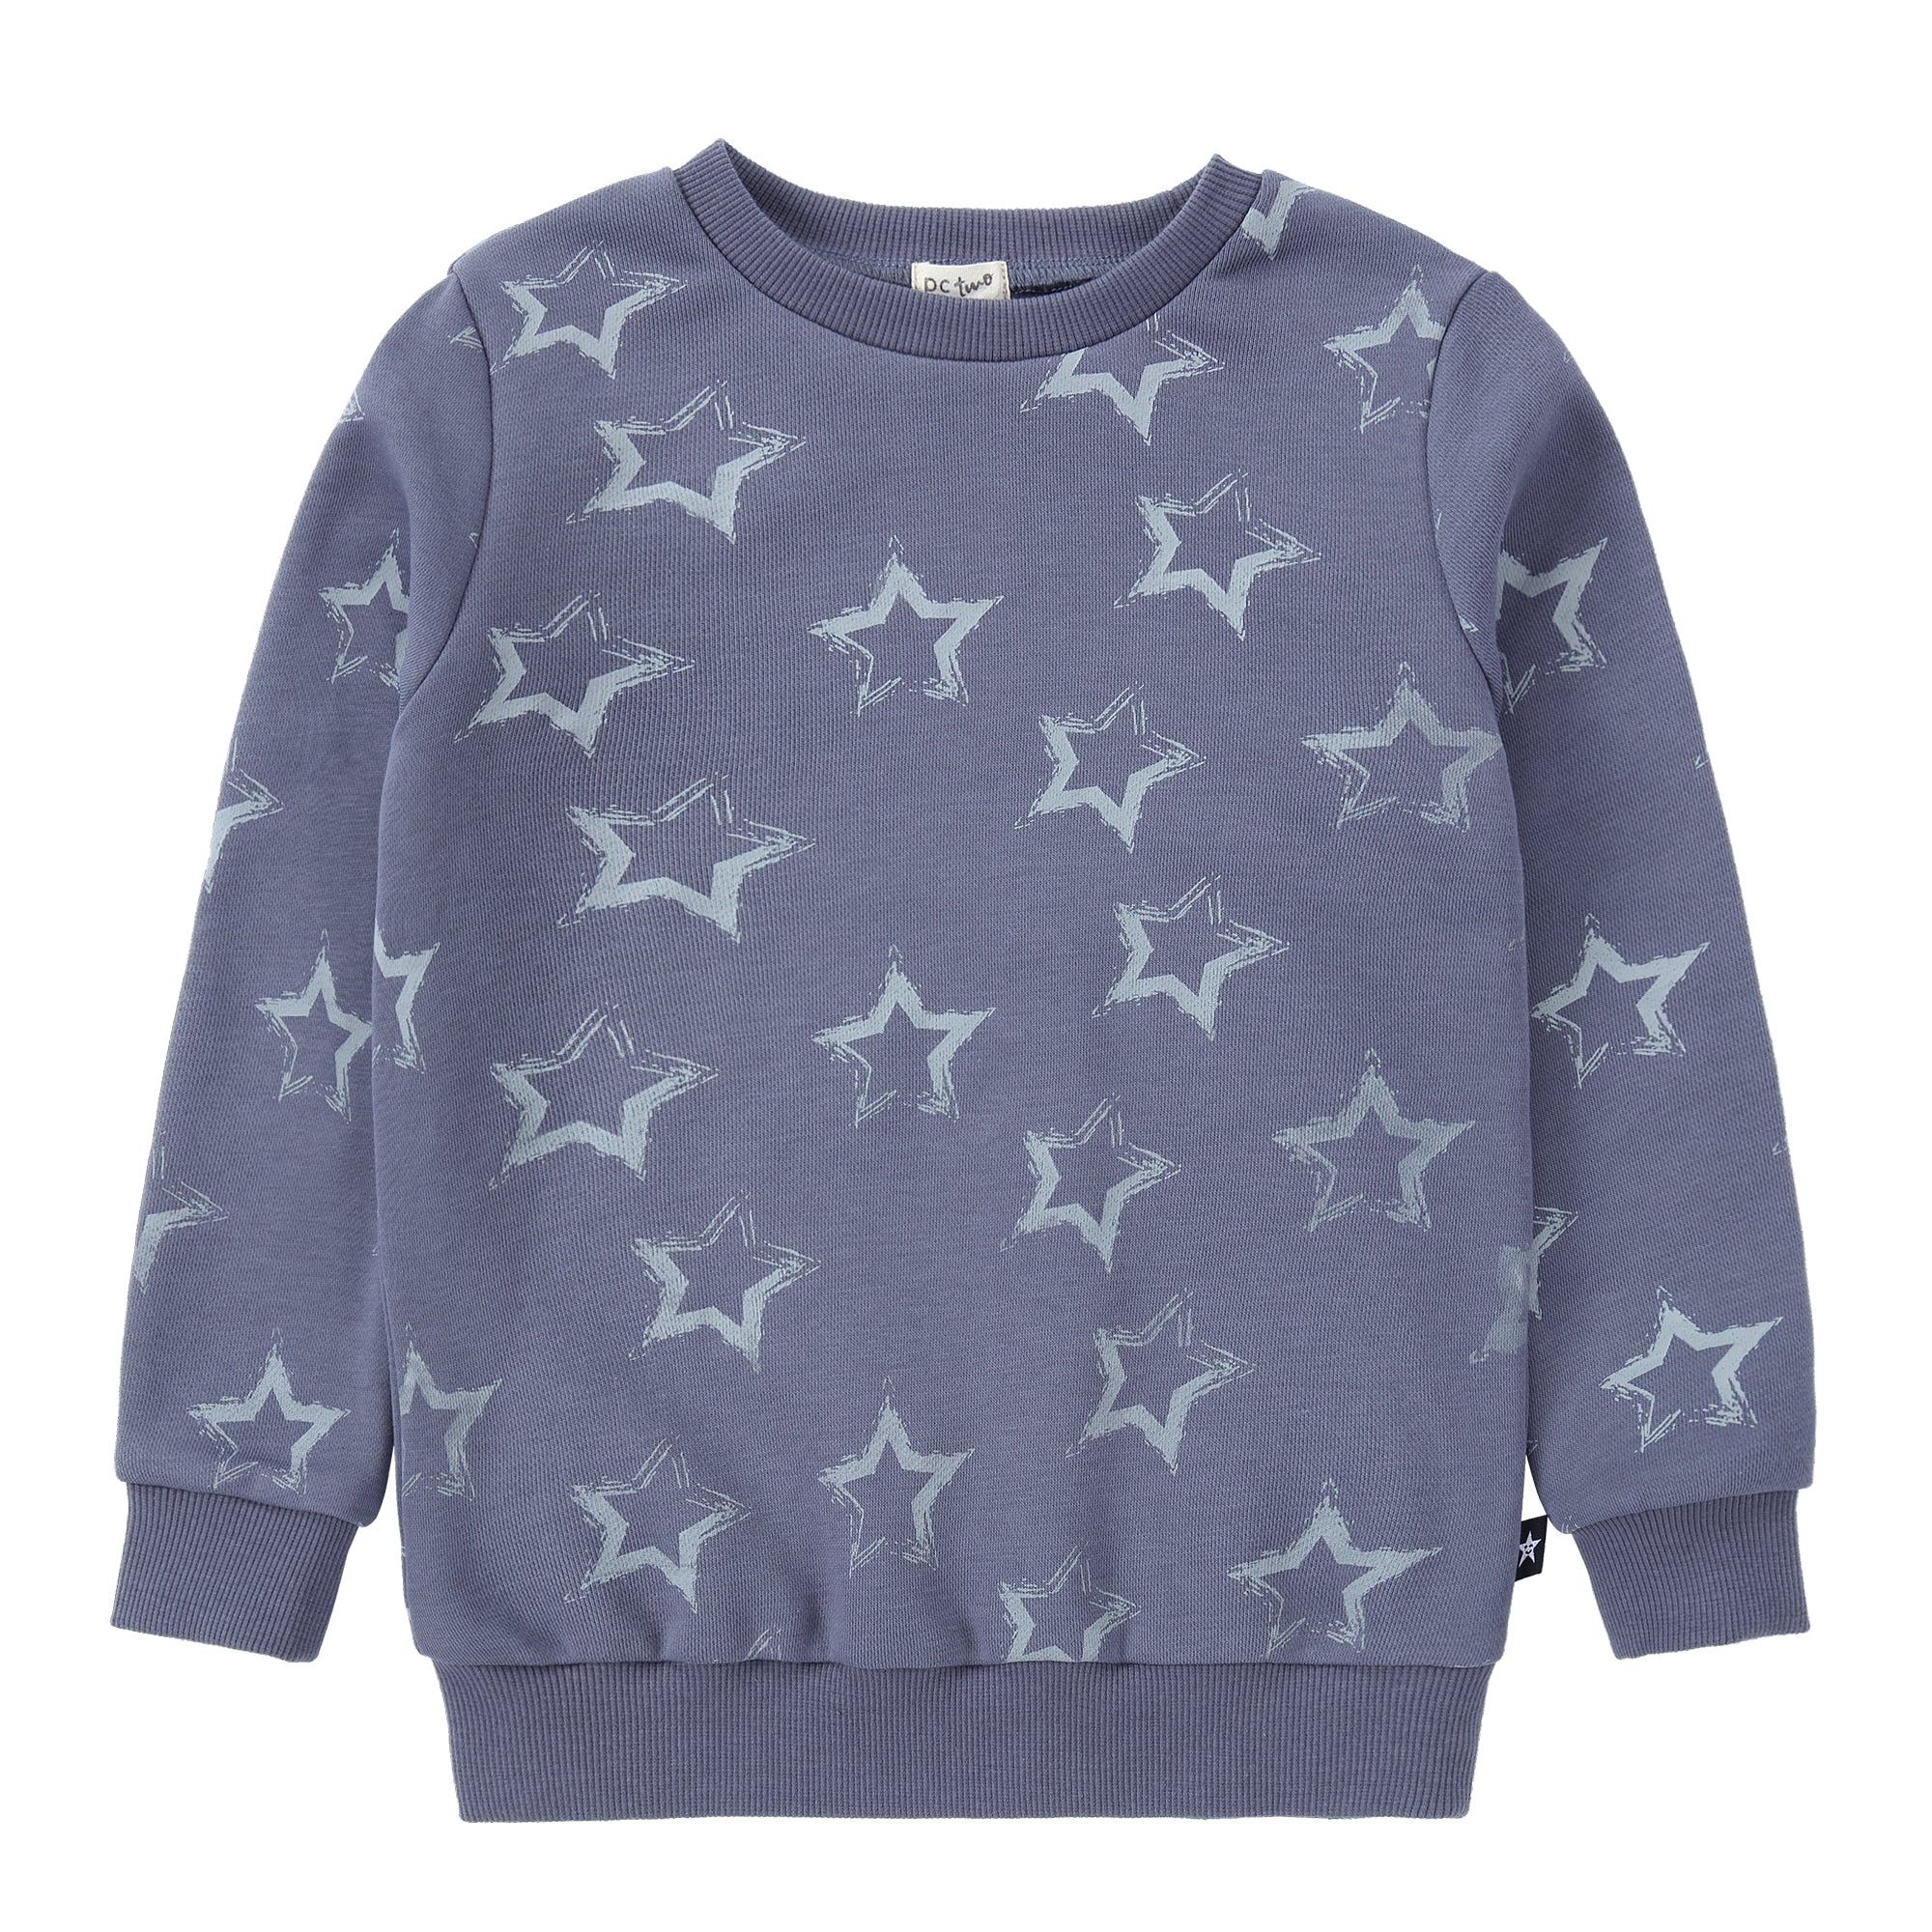 Steel Blue Sweatshirt With Star Print